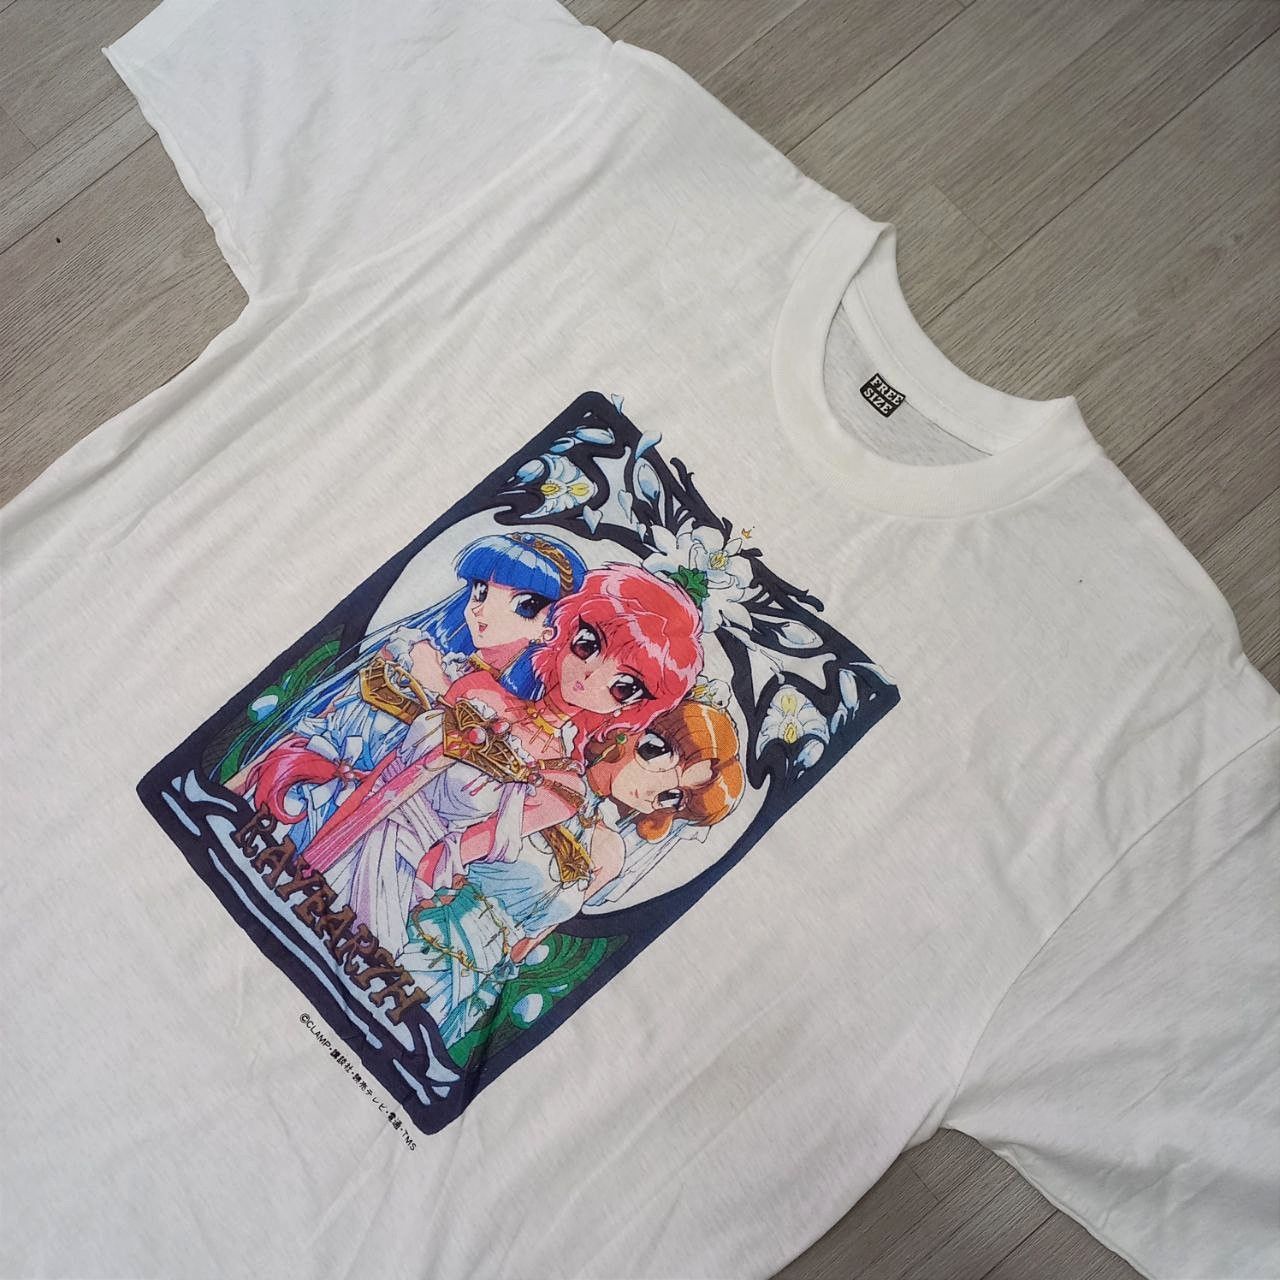 Vintage 90s MAGIC KNIGHT RAYEARTH Manga Anime T-shirt - 3